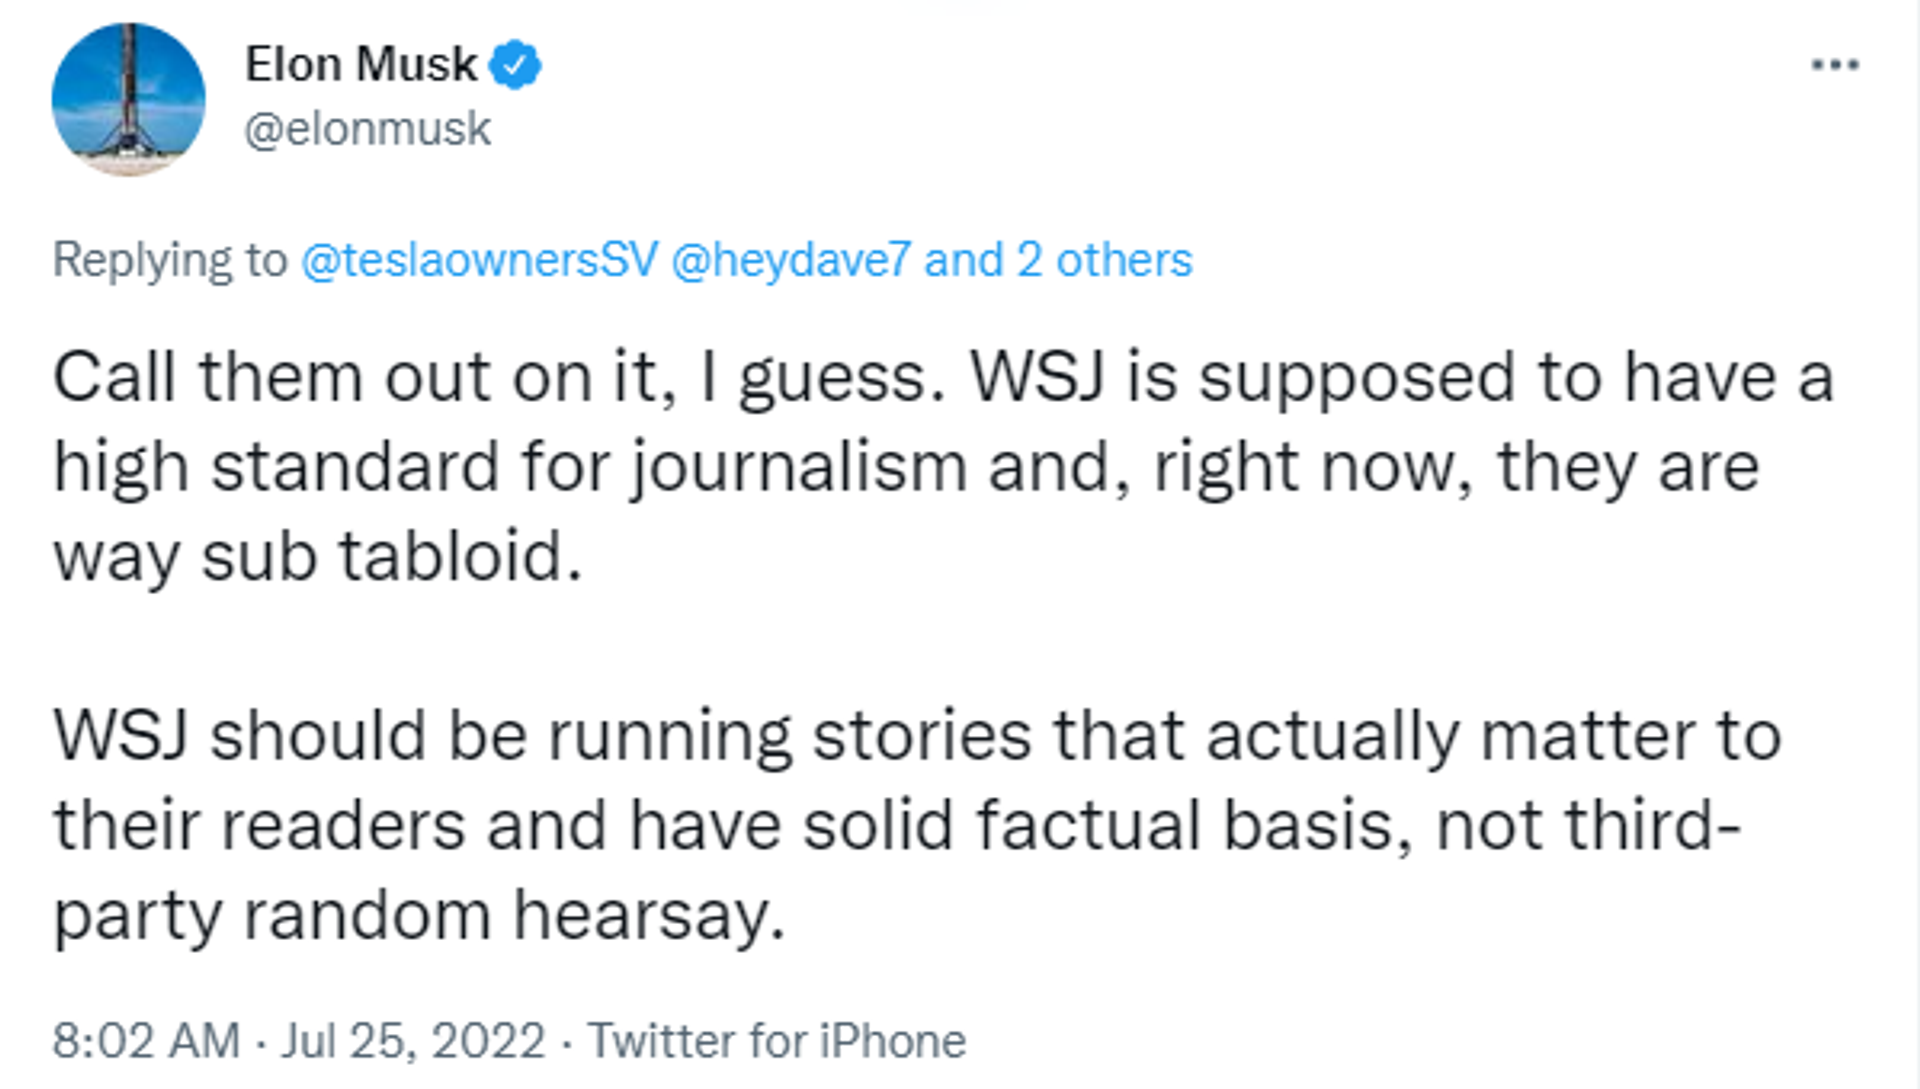 Elon Musk Suggest Wall Street Journal to Have High Standard for Journalism - Sputnik International, 1920, 26.07.2022